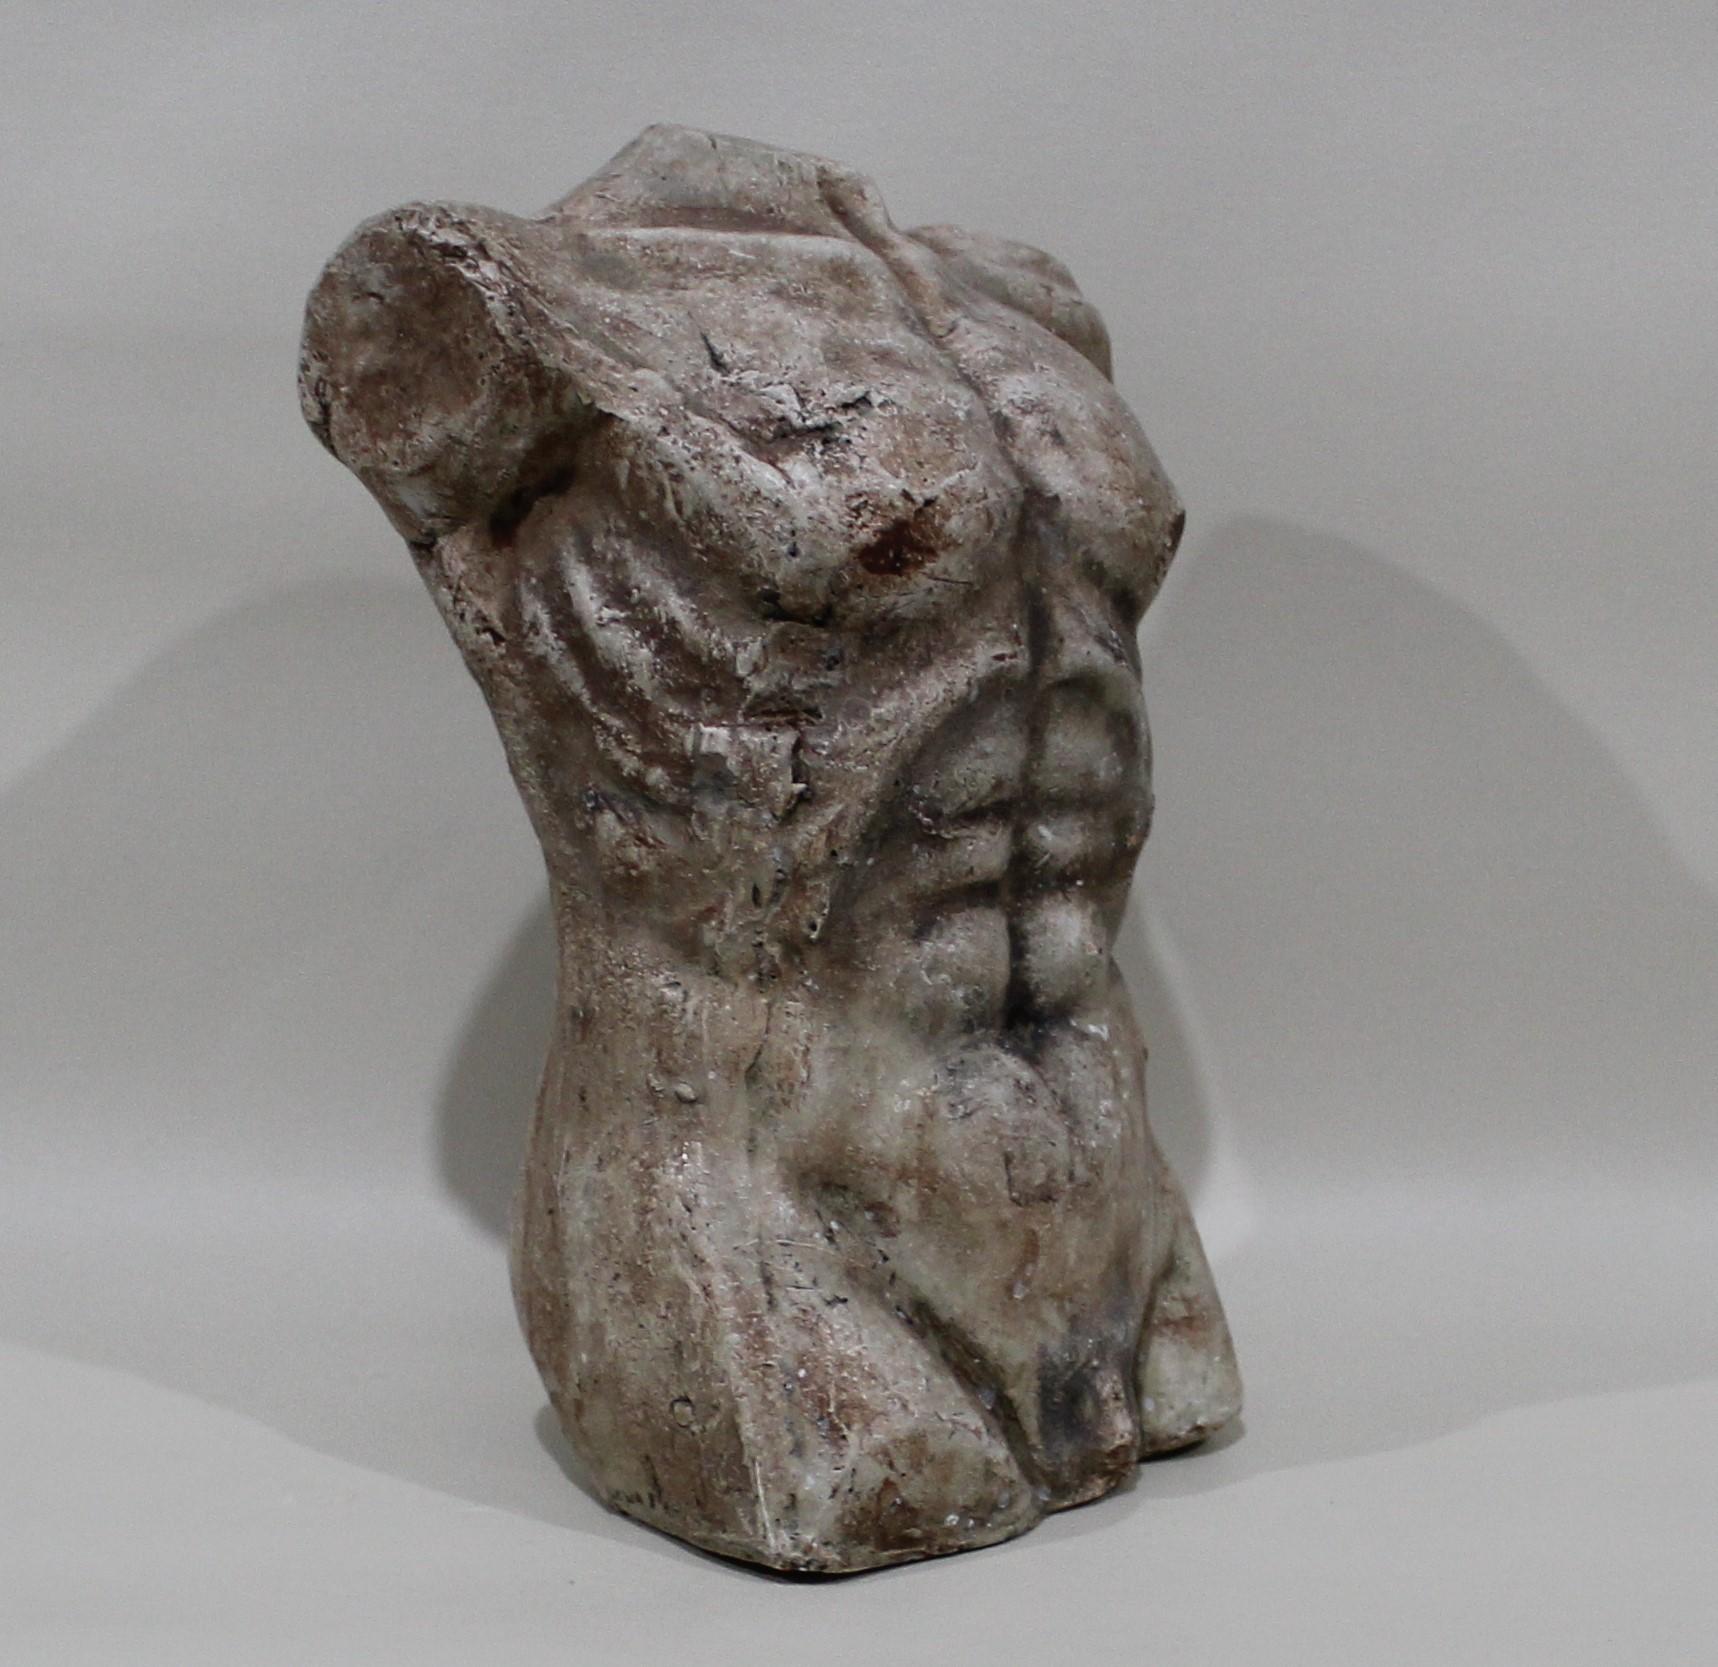 Nude male torso sculpture made of plaster.